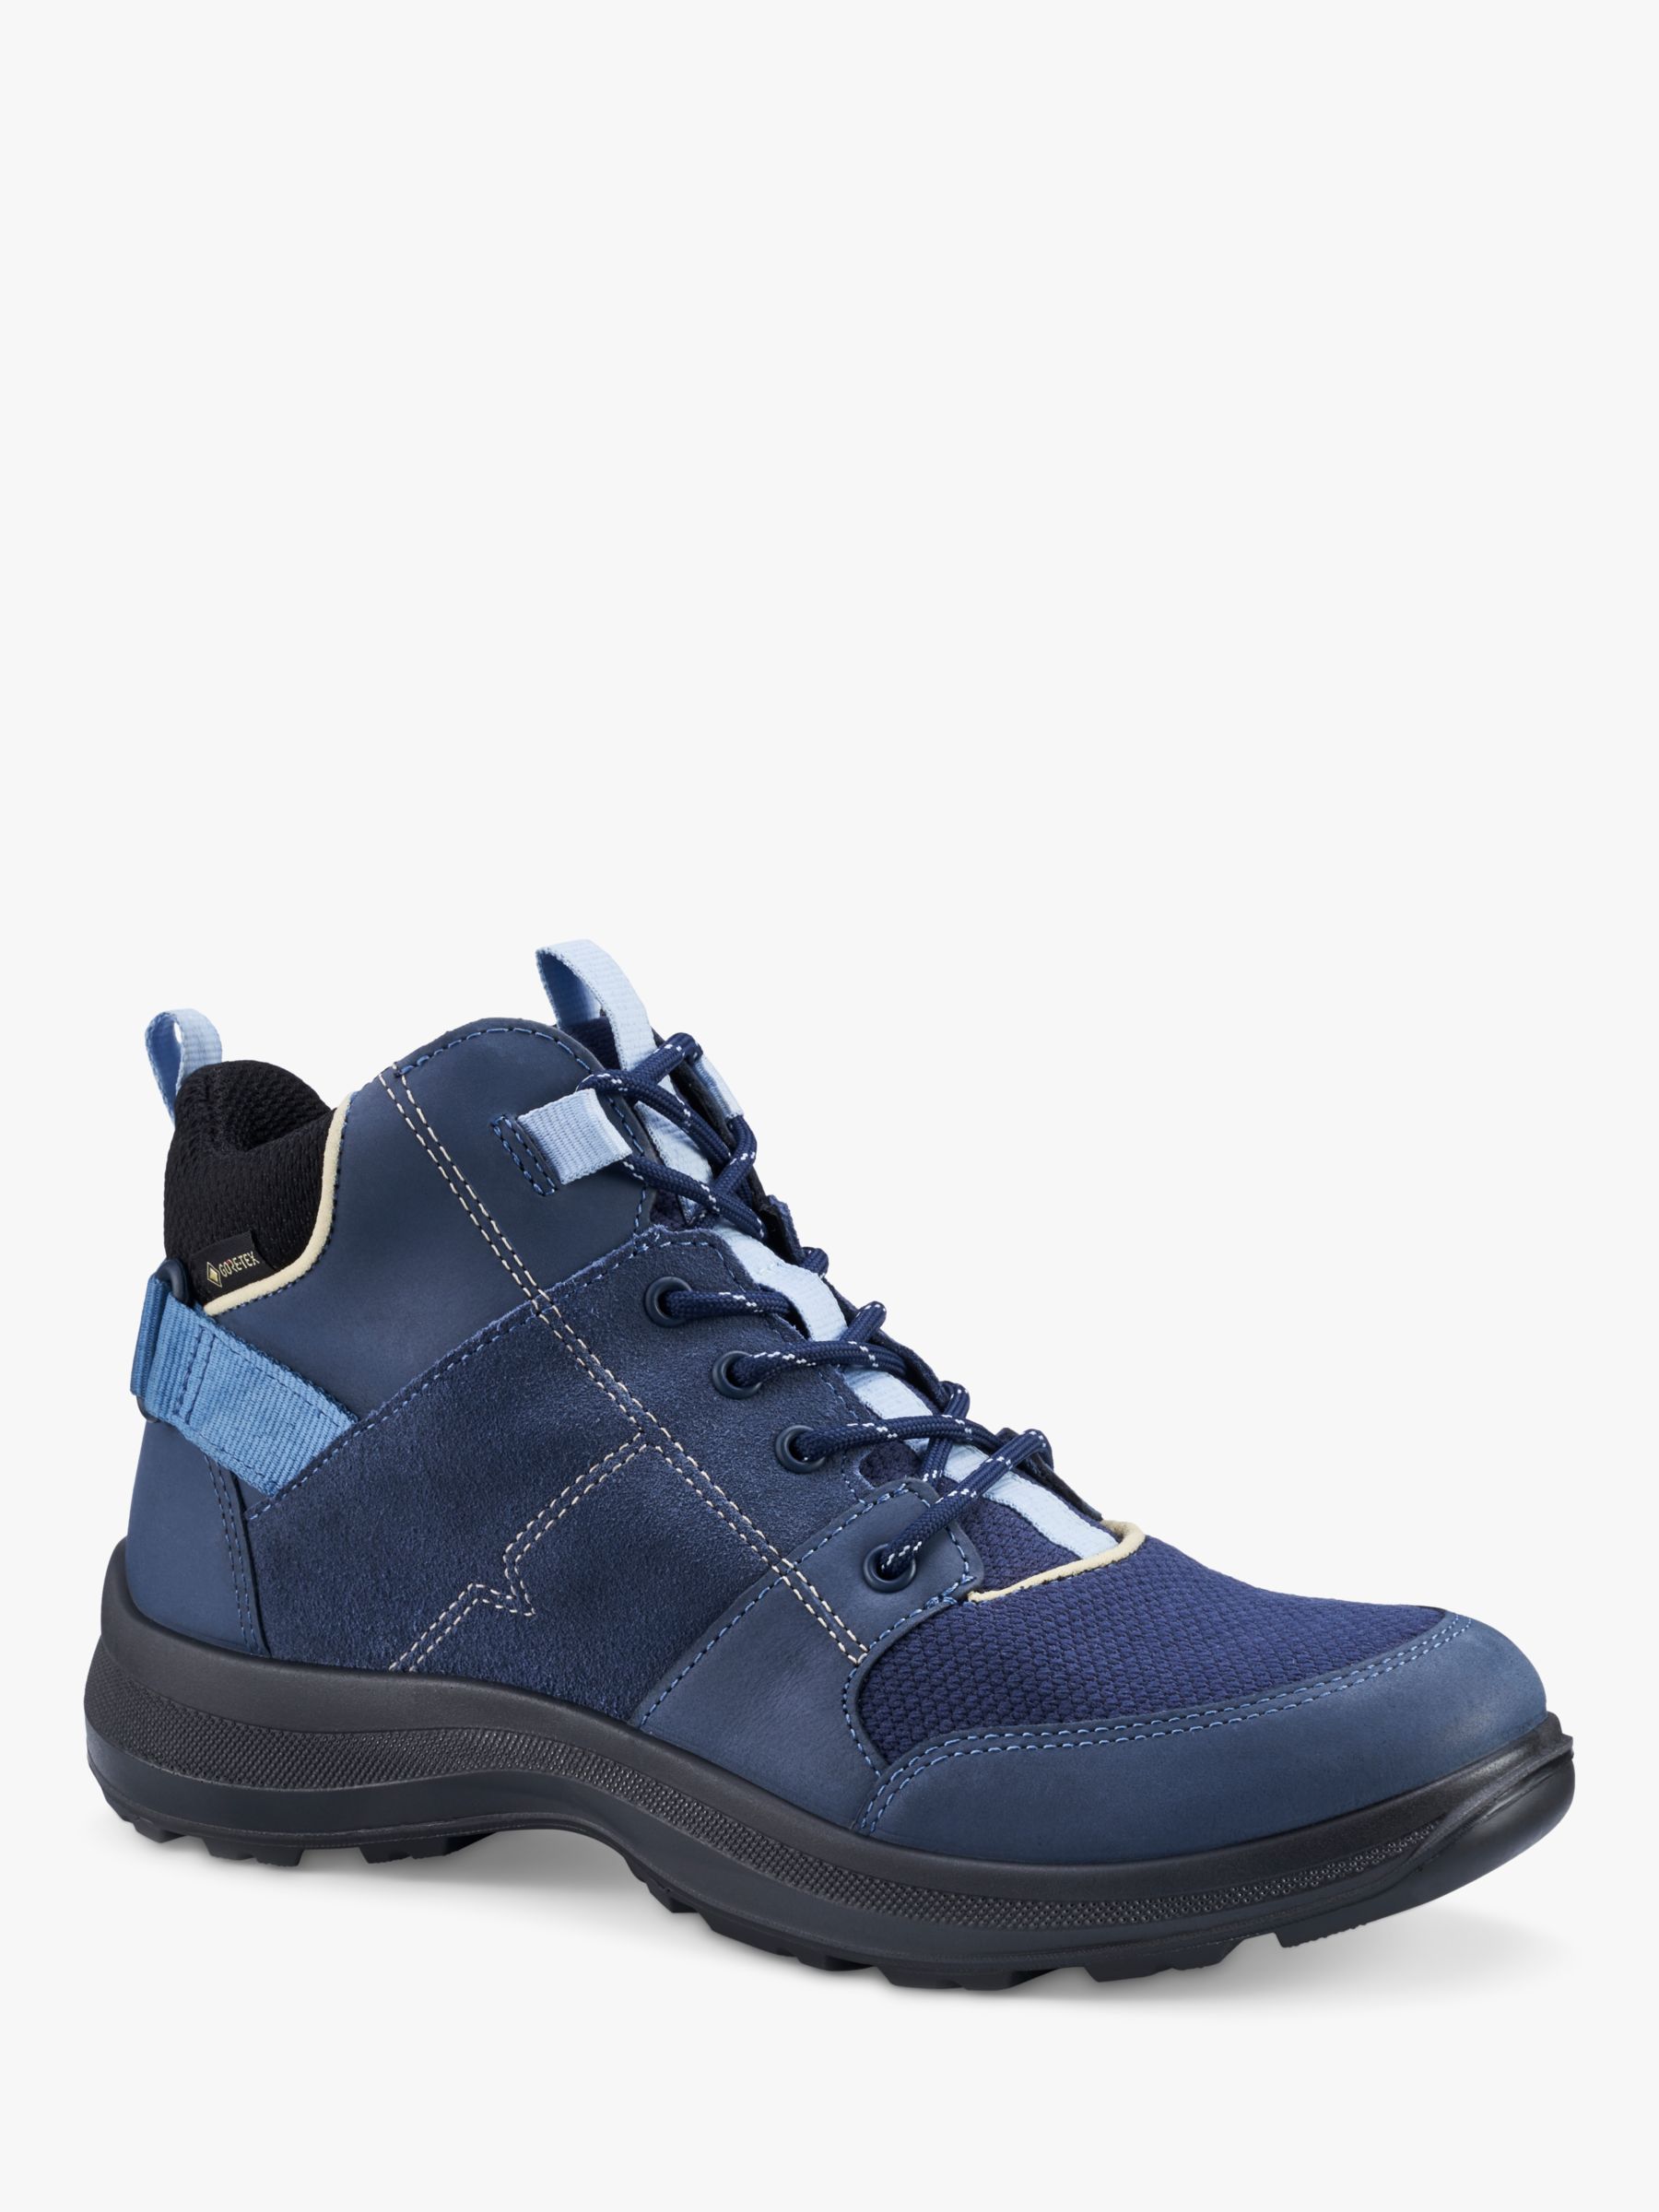 Hotter Trail Adjustable Goretex Walking Boots, Denim Navy/Multi, 3